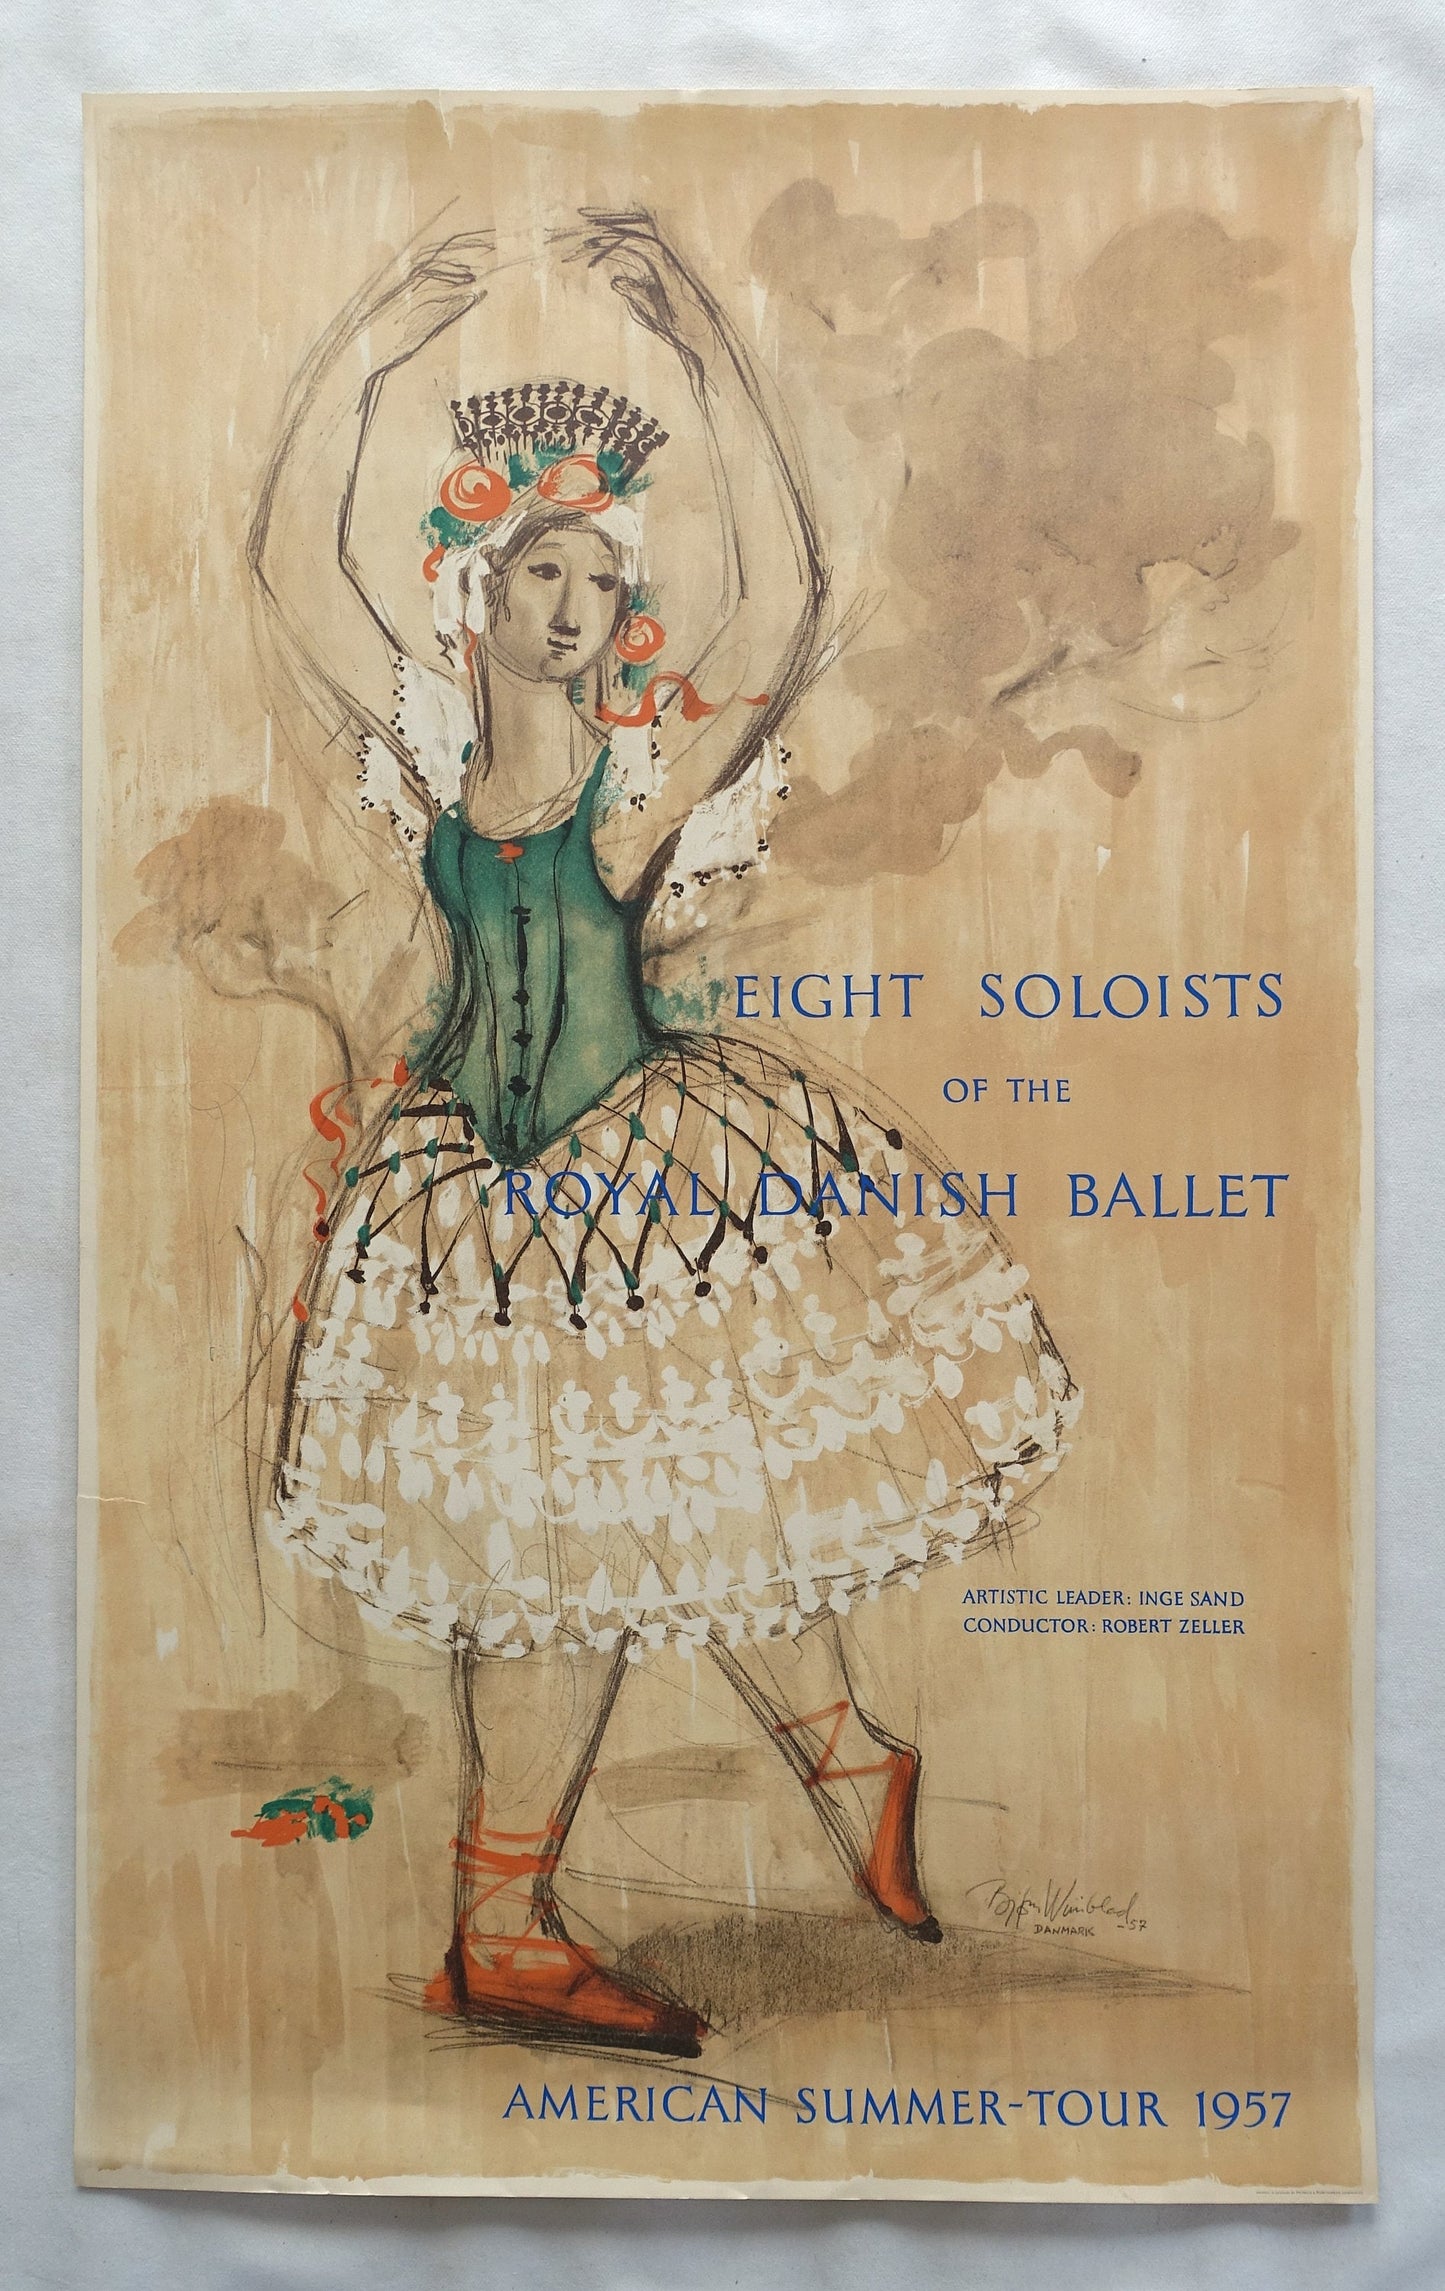 1957 Wiinblad Royal Danish Ballet (text version) - Original Vintage Poster